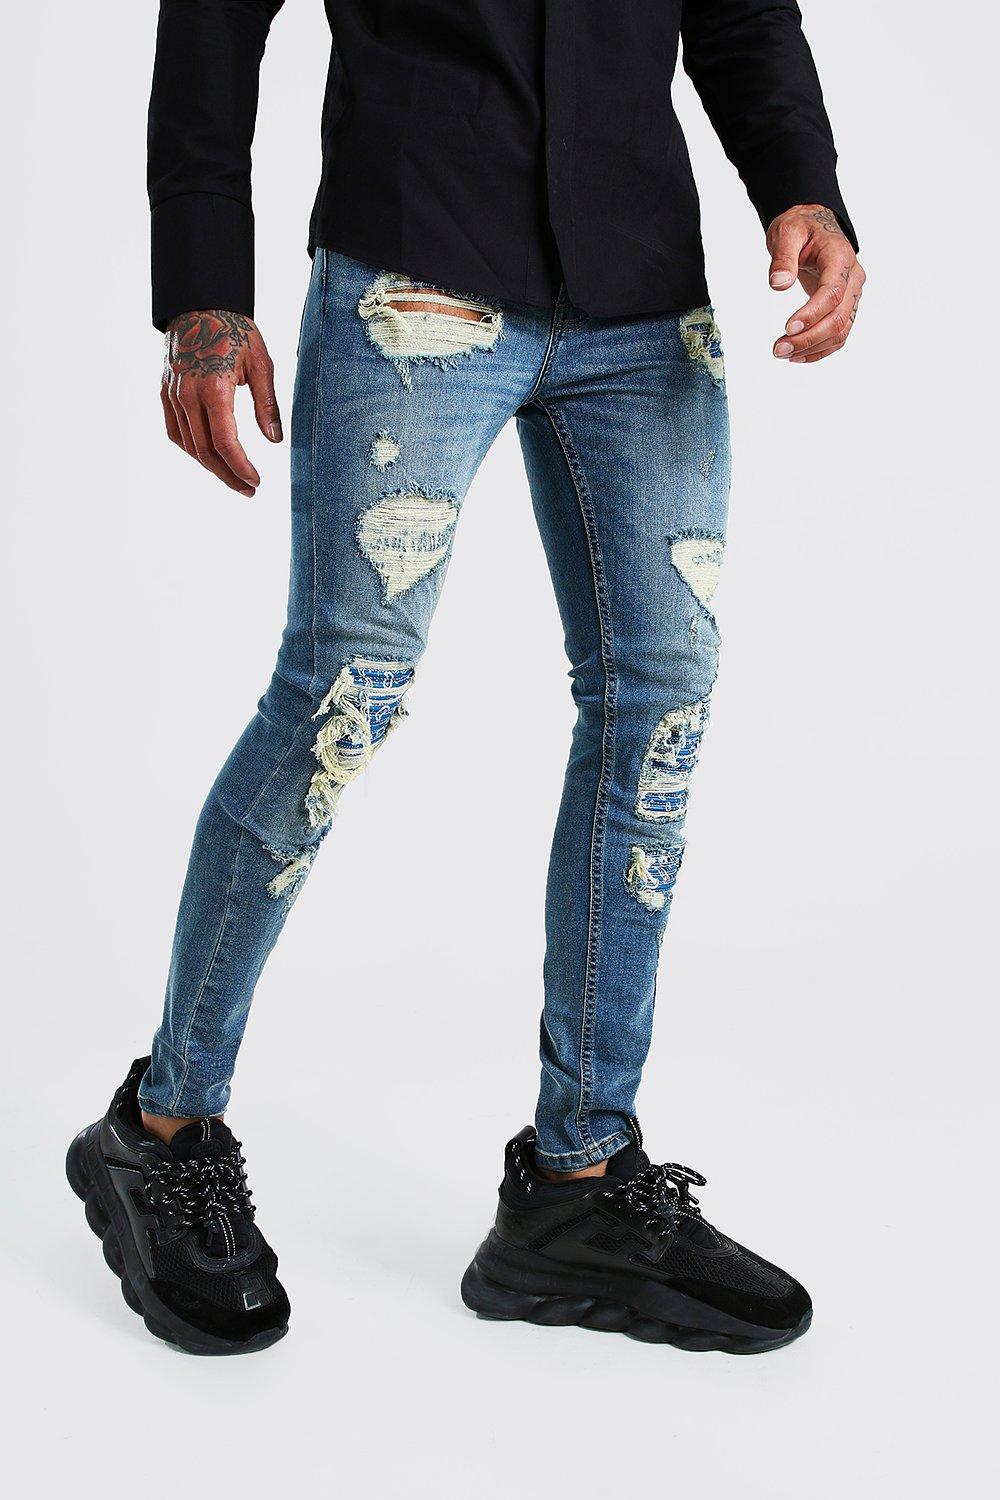 blue bandana jeans